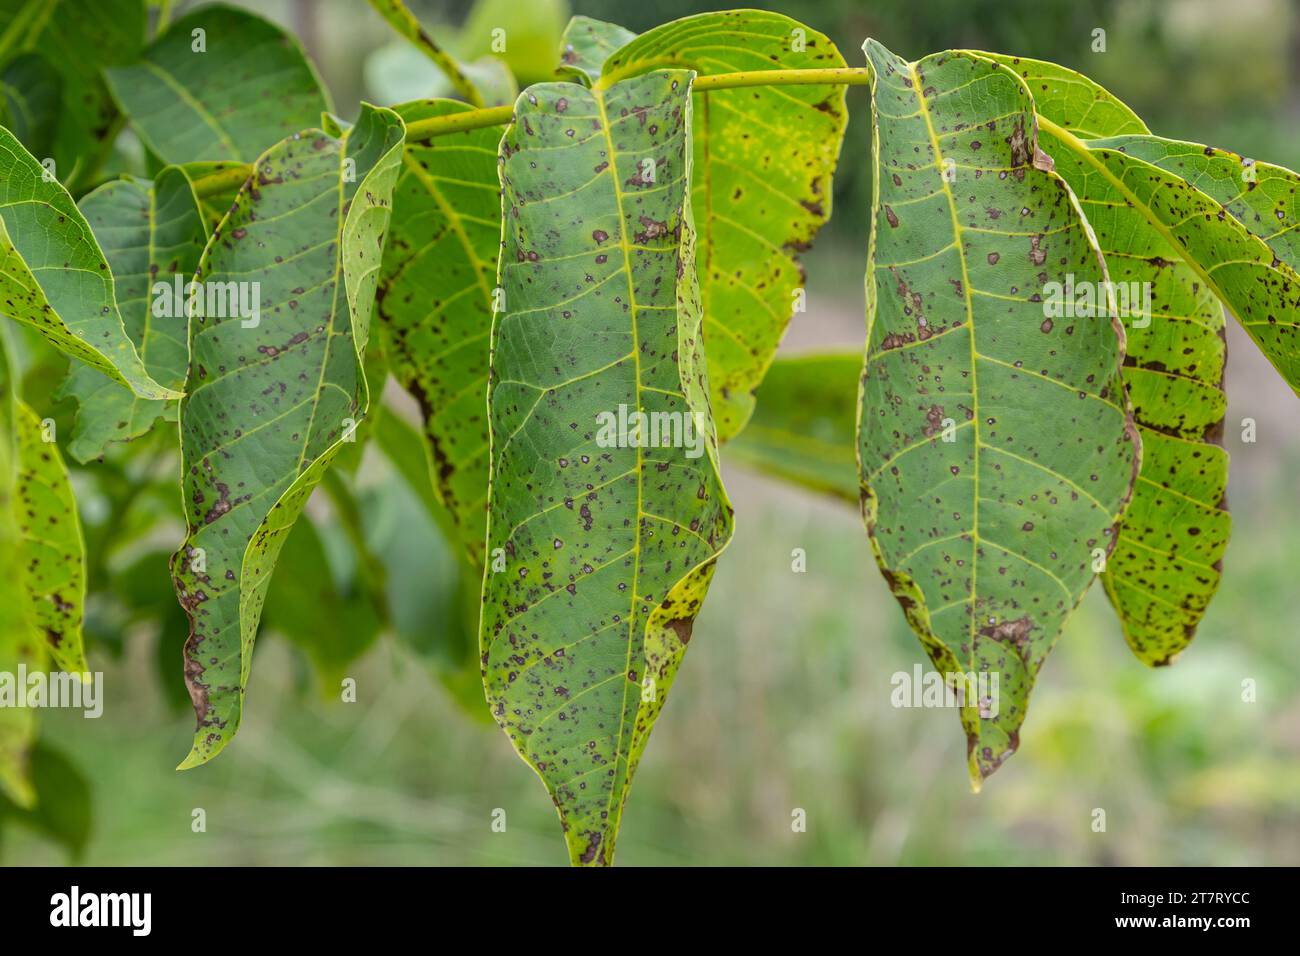 Walnut anthracnose or walnut black spot - Gnomonia, Ophiognomonia leptostyla, fungal plant pathogen. Stock Photo